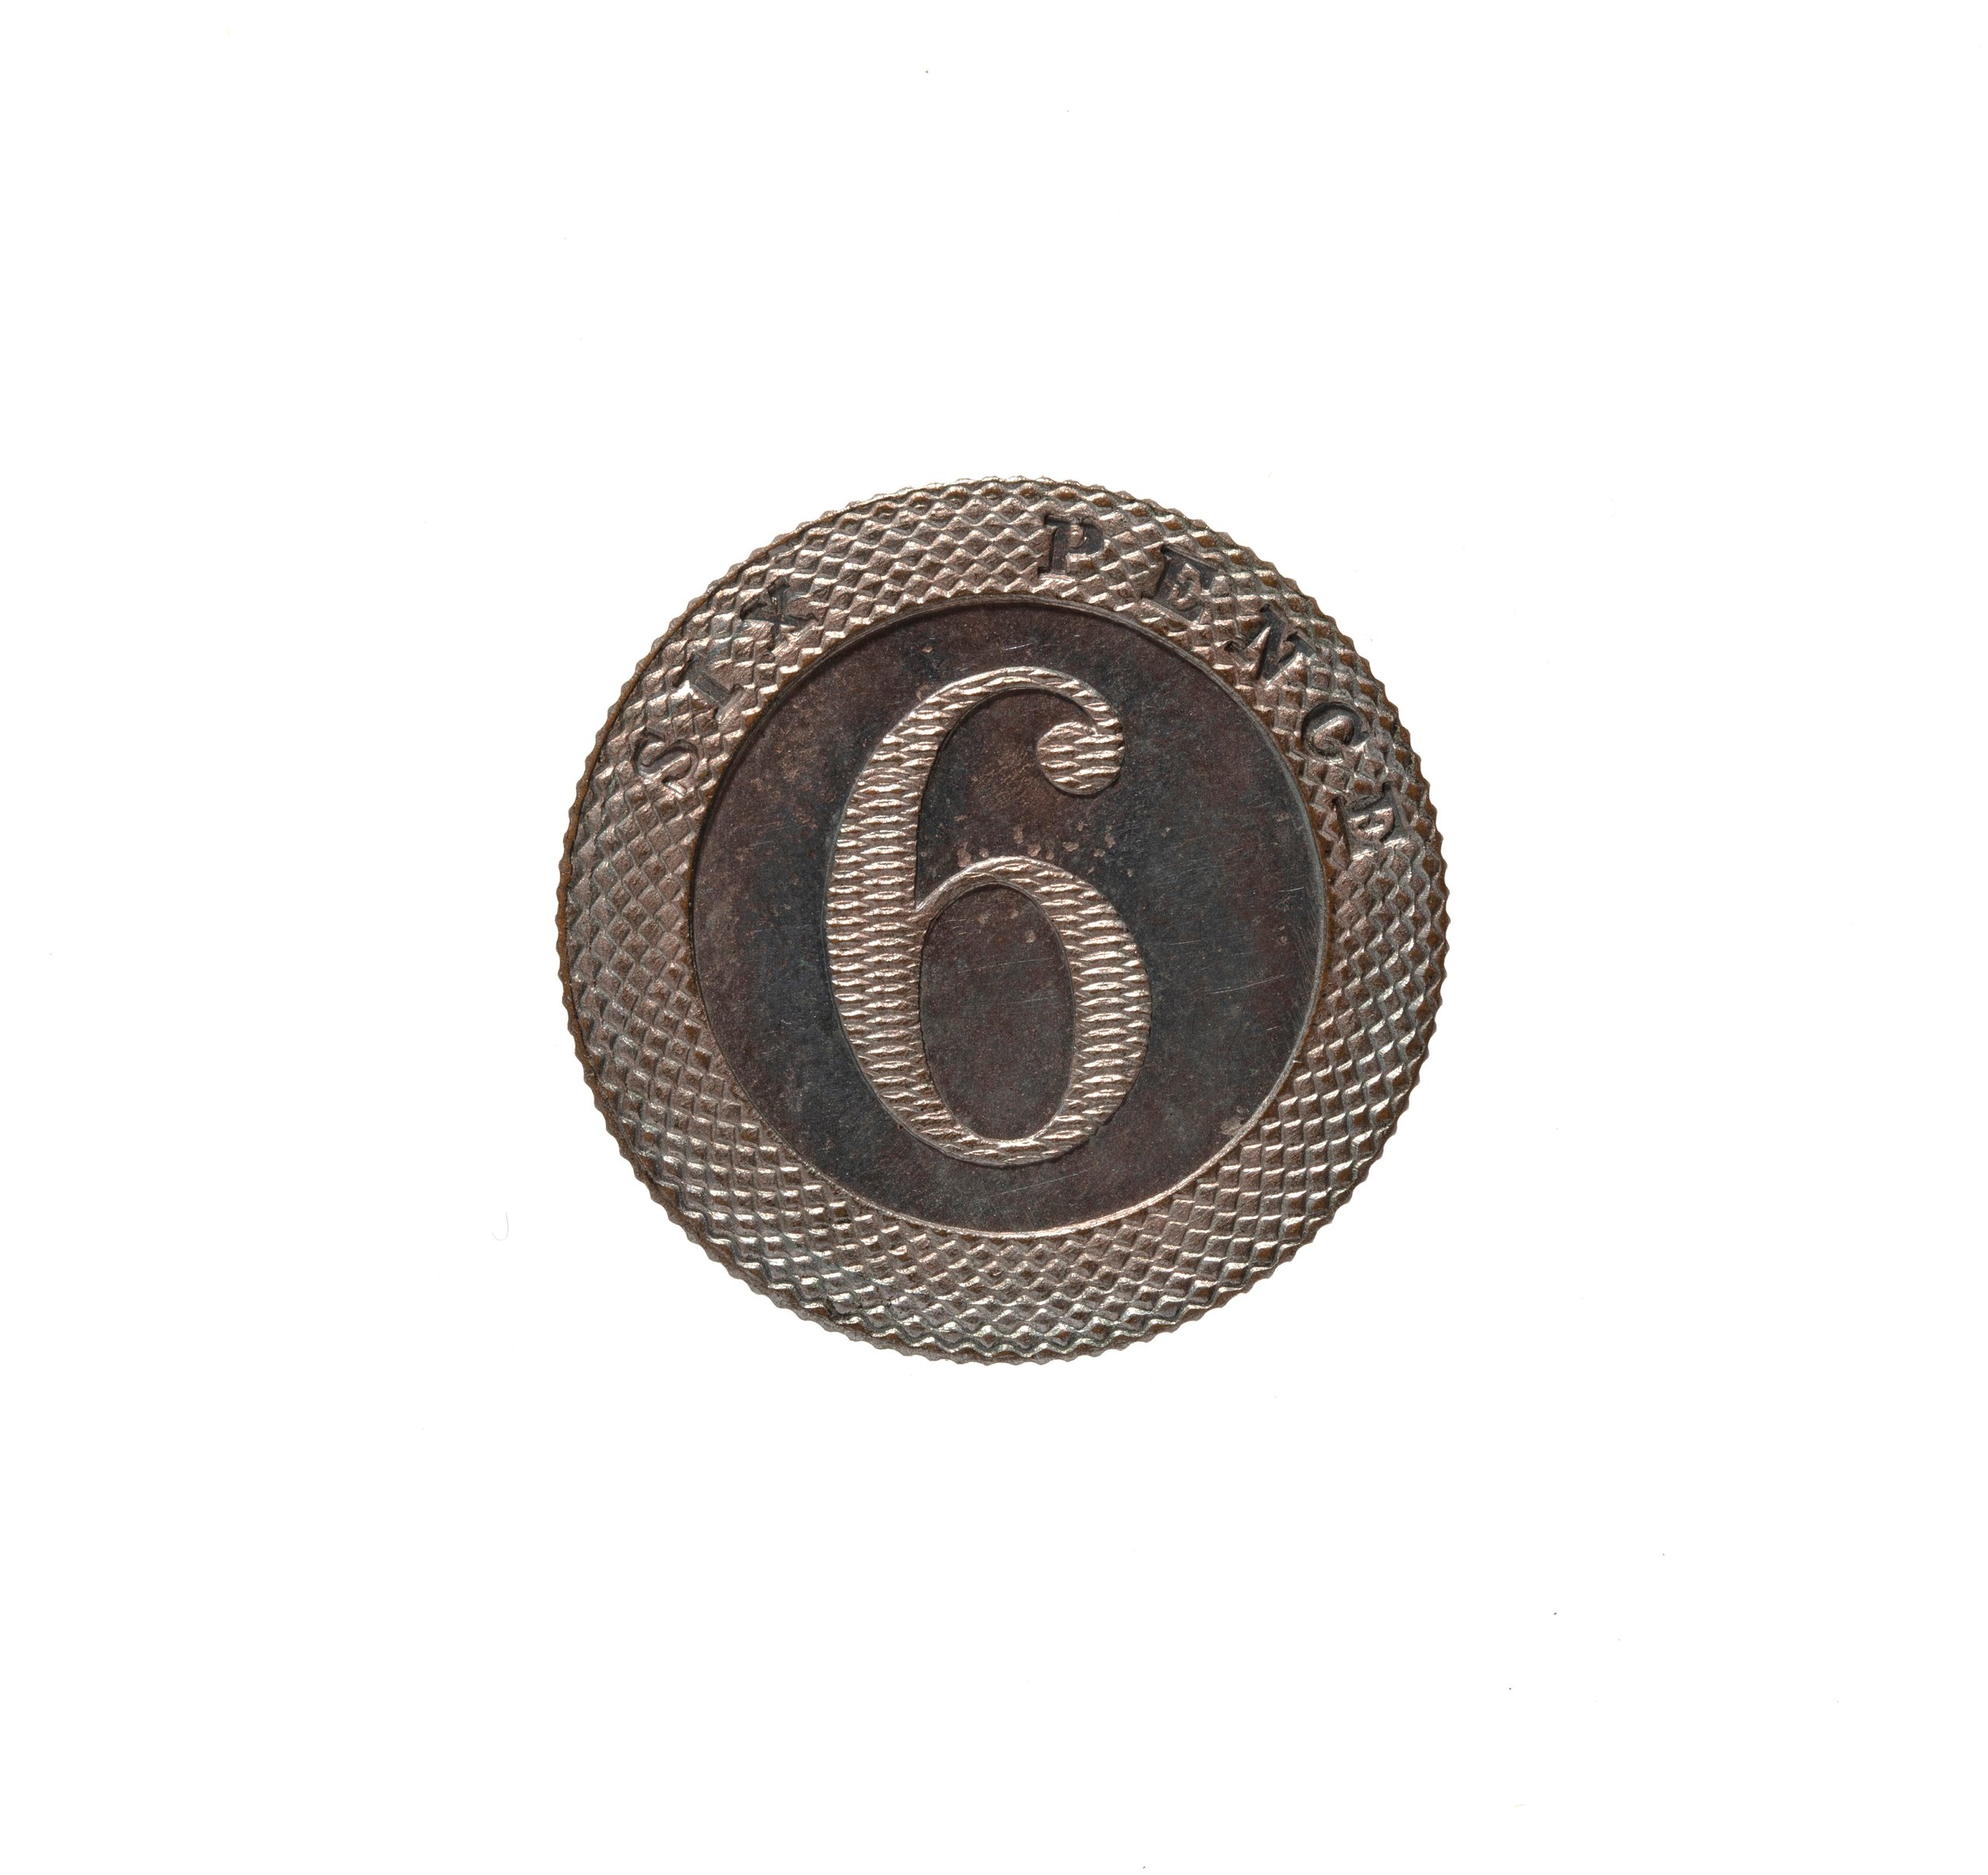 Australian Sixpence coin